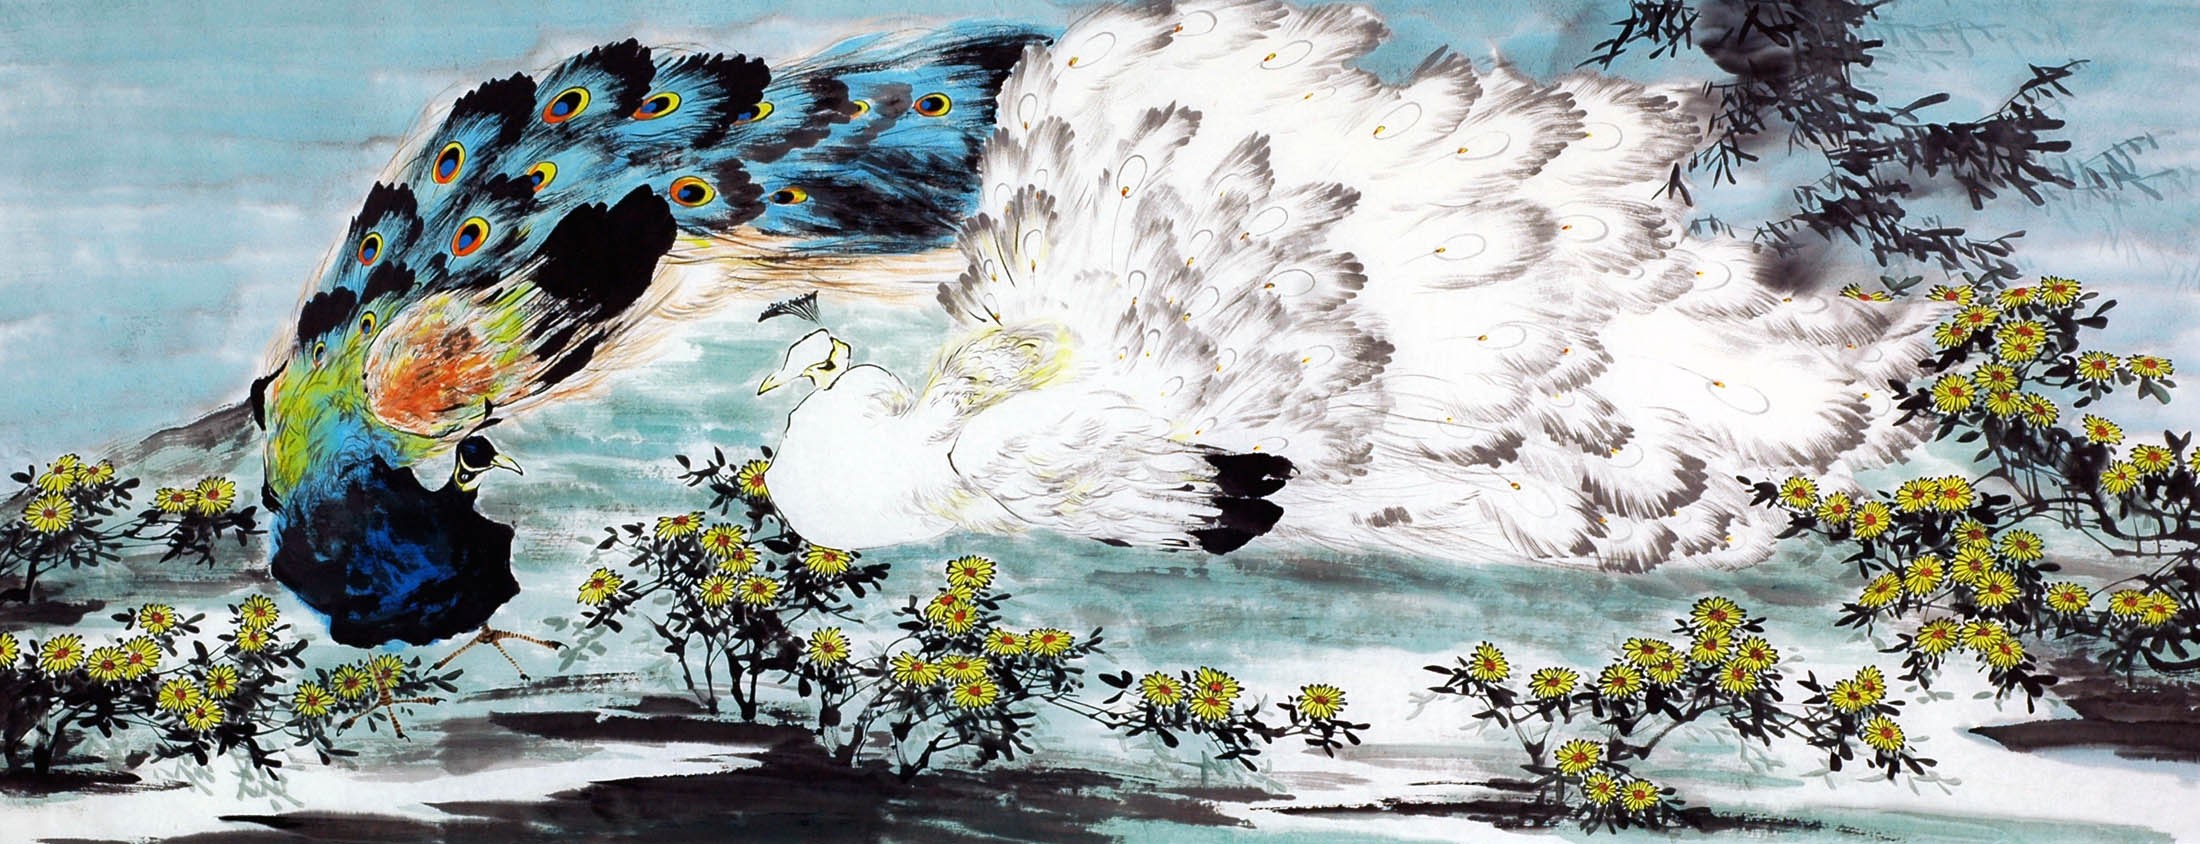 Chinese Peacock Painting - CNAG010675